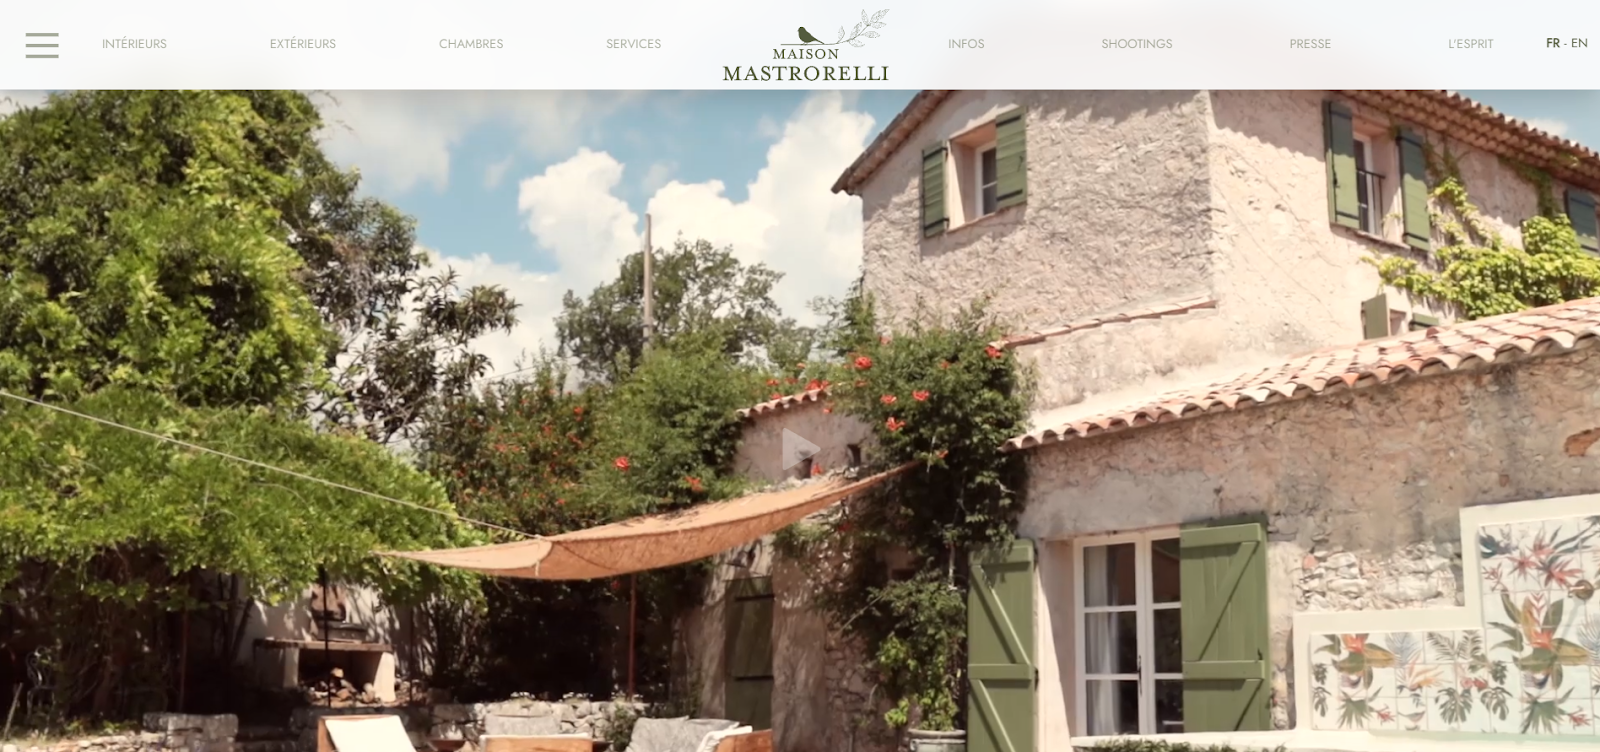 hotel website examples, Maison Mastrorelli